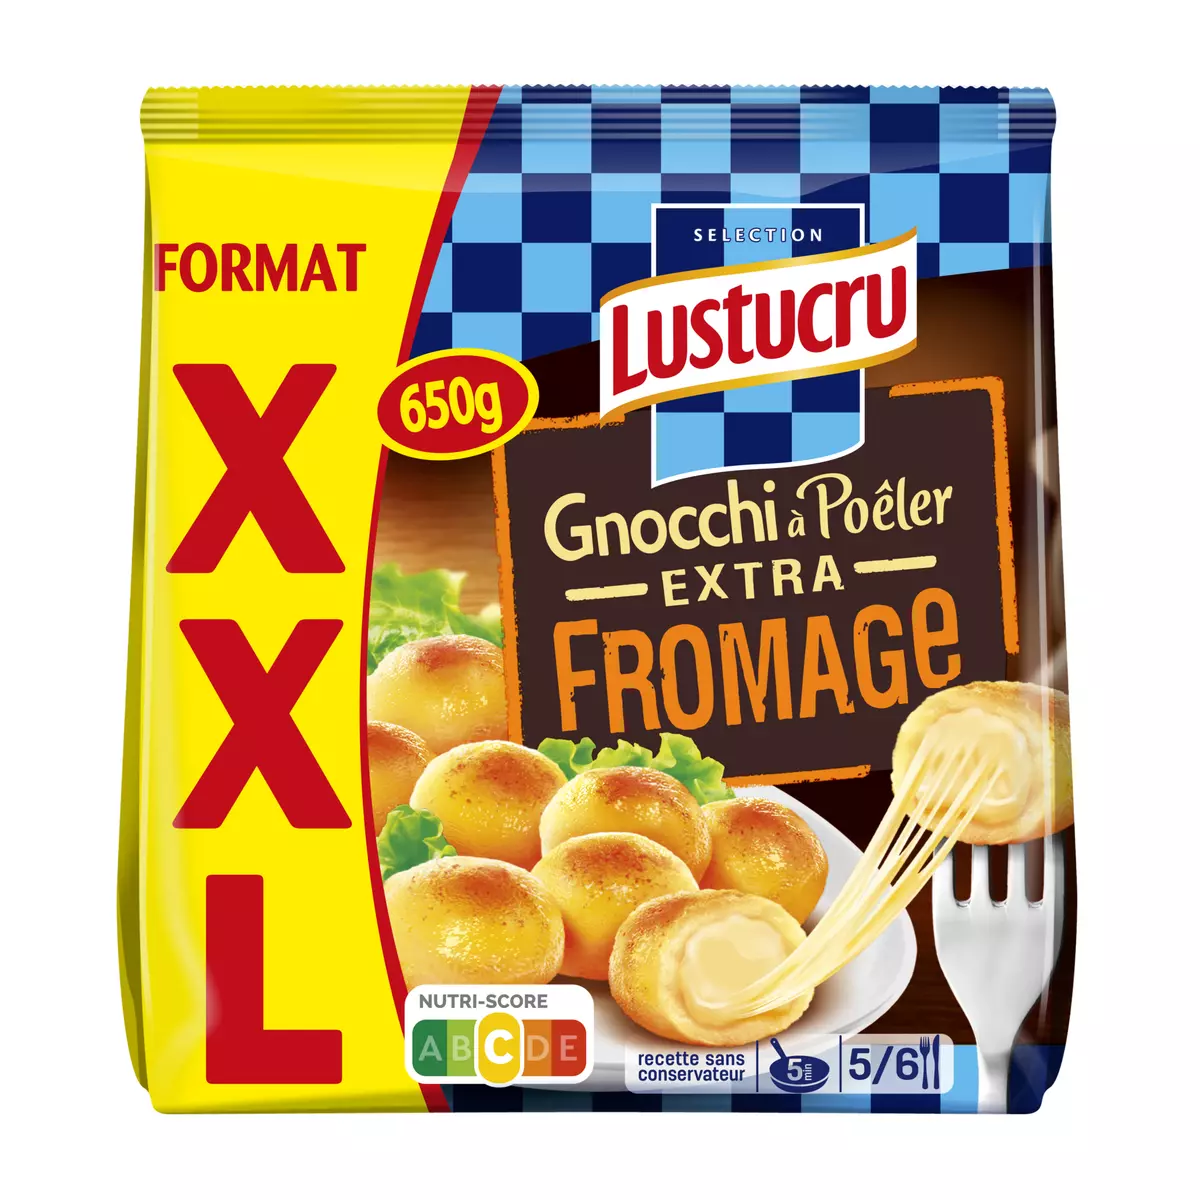 LUSTUCRU Gnocchi à poêler extra fromage format XXL 4-5 portions 650g